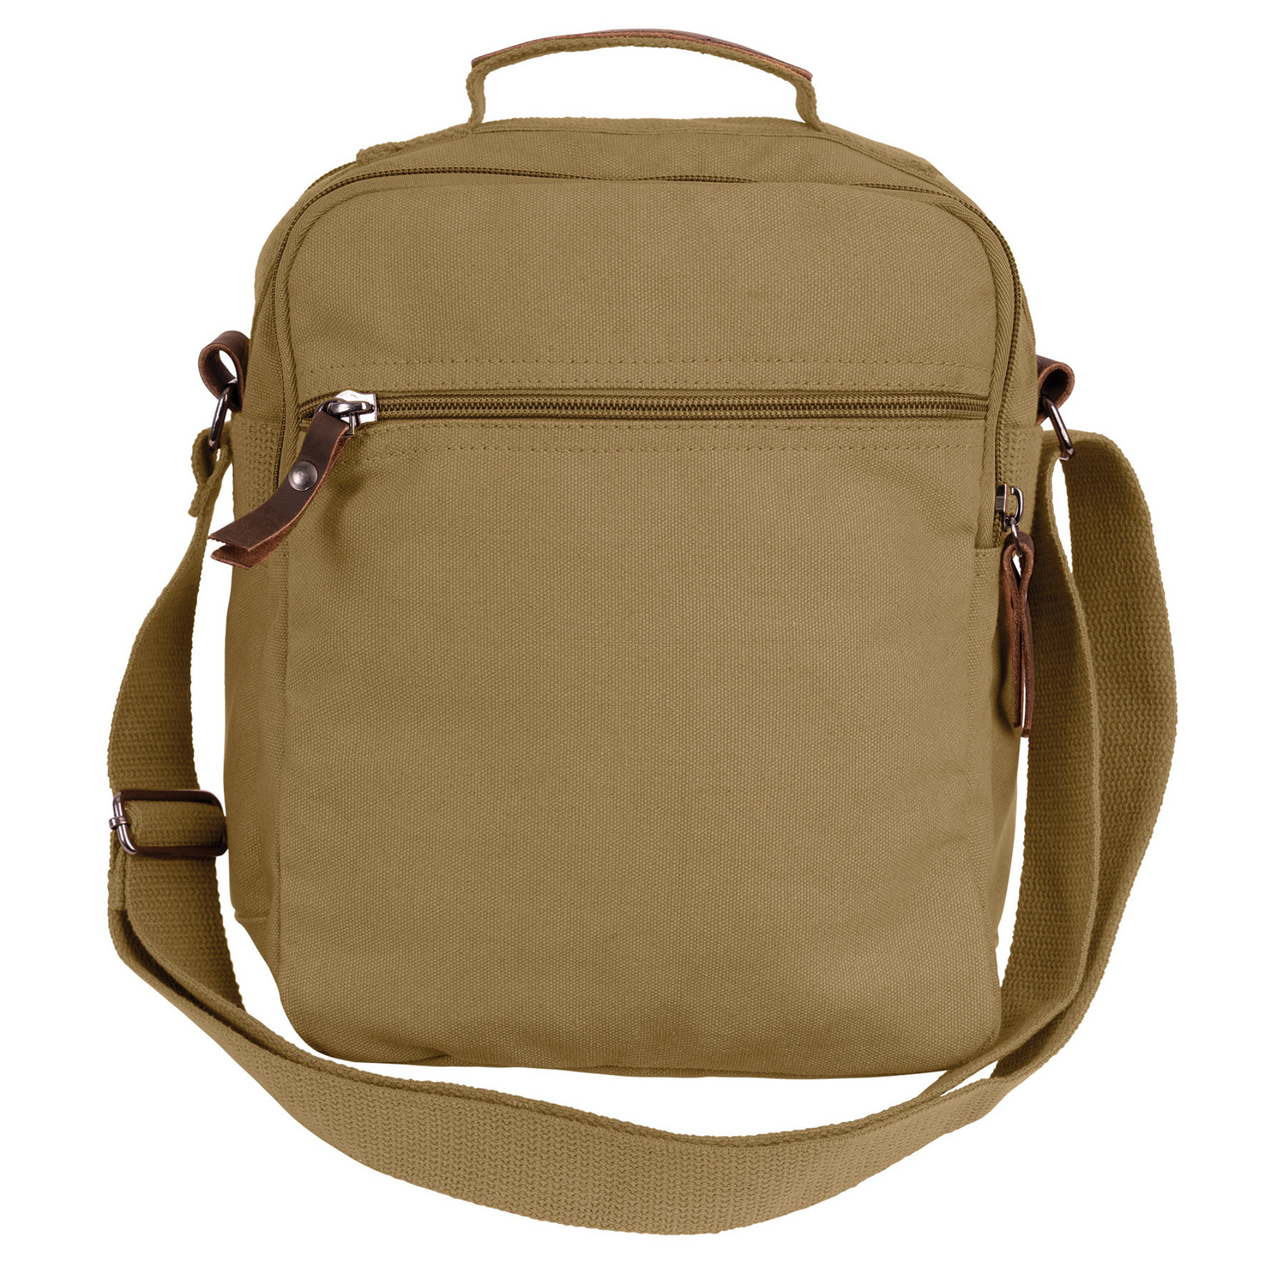 Crossbody Bags, Shoulder Bag, School Bag